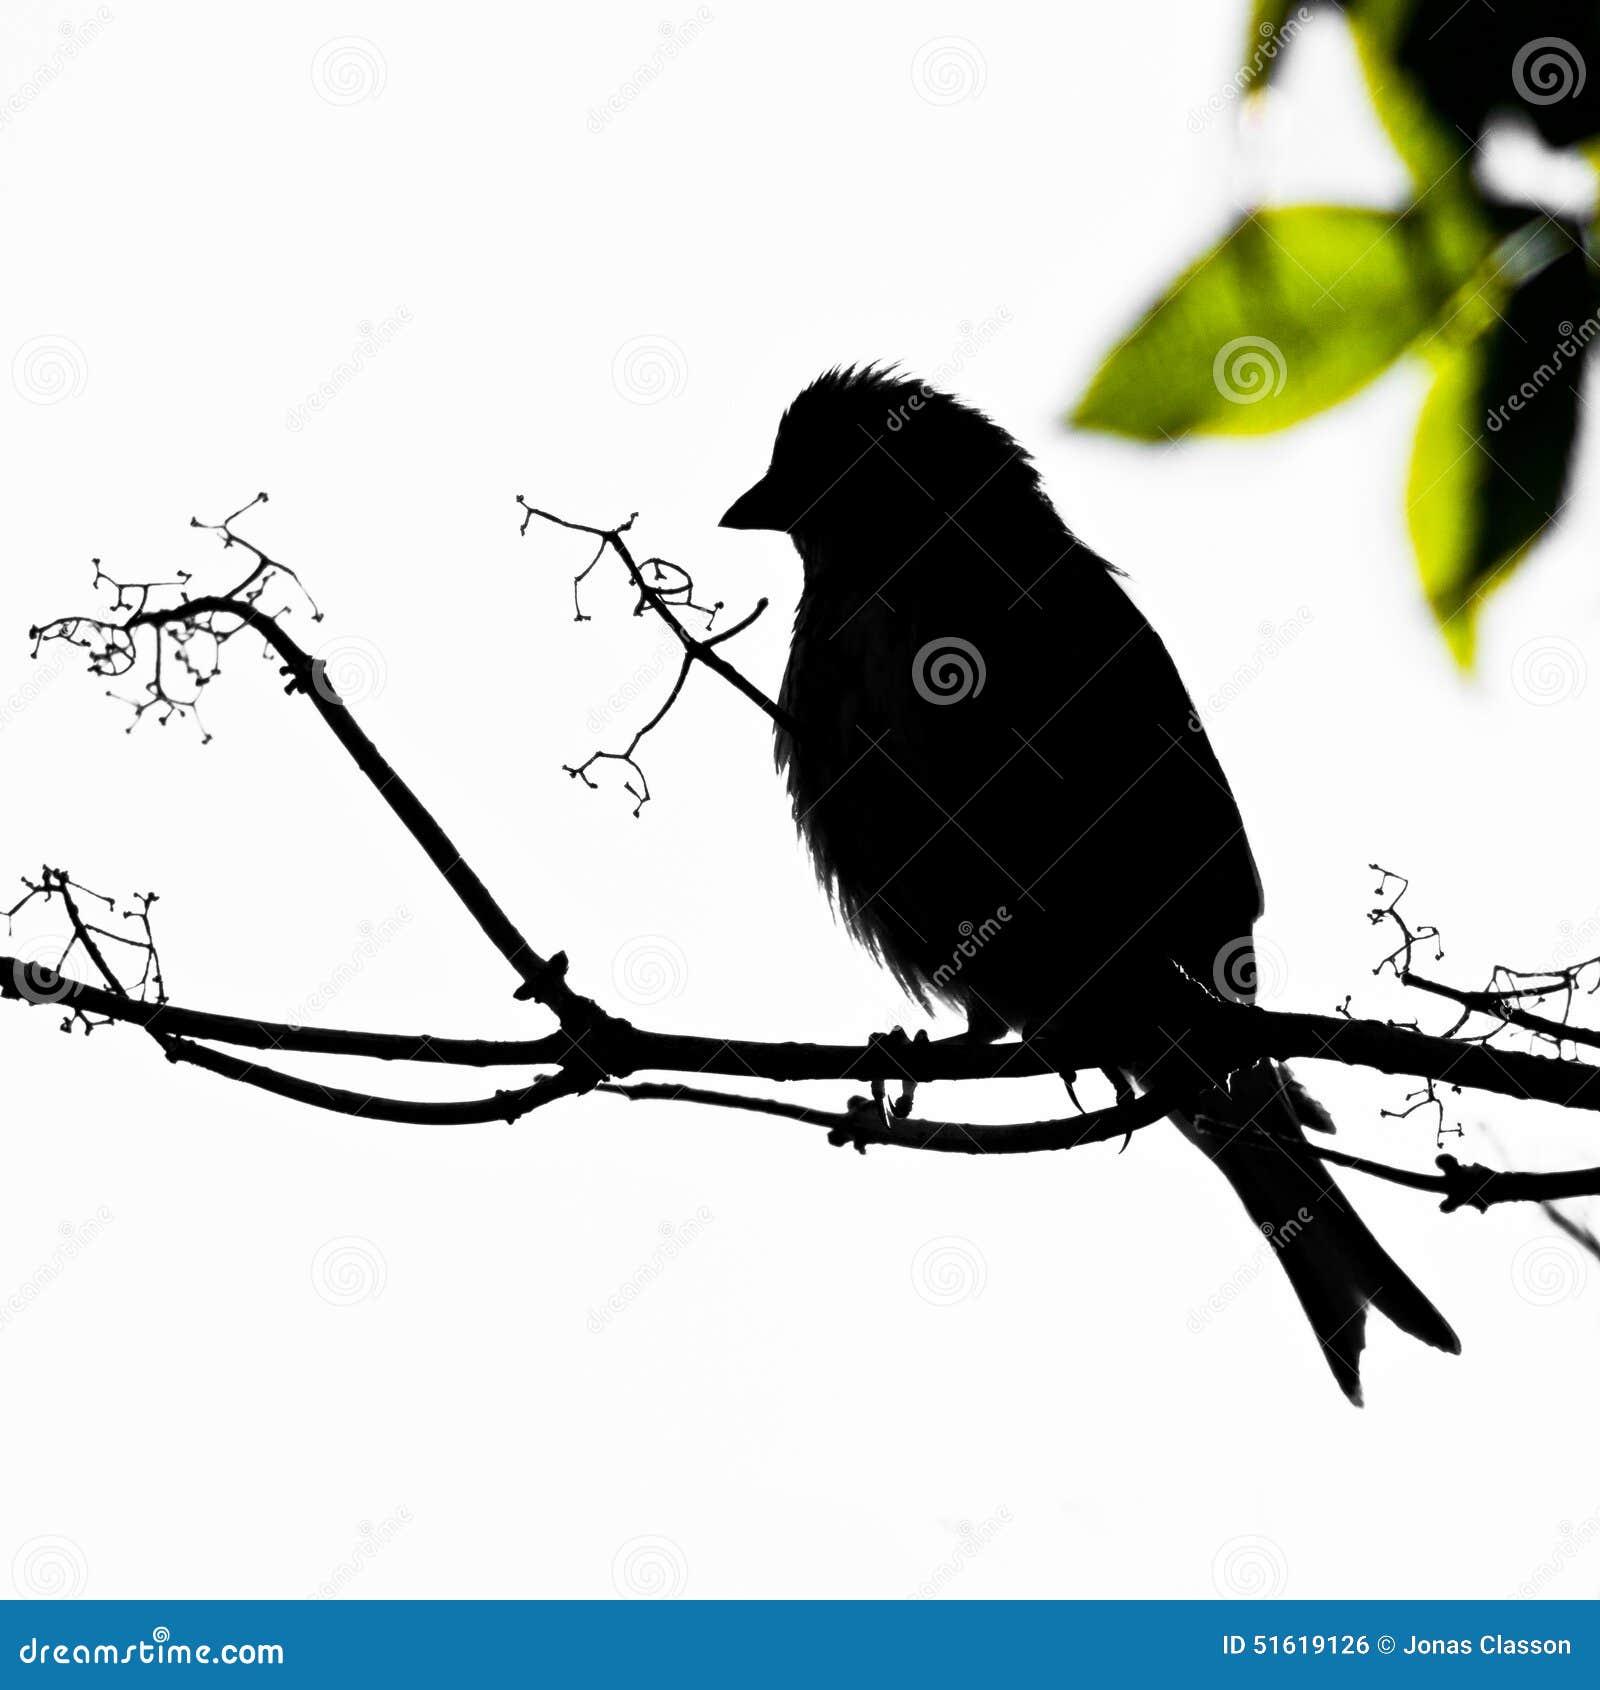 black linnet bird on branch siluette